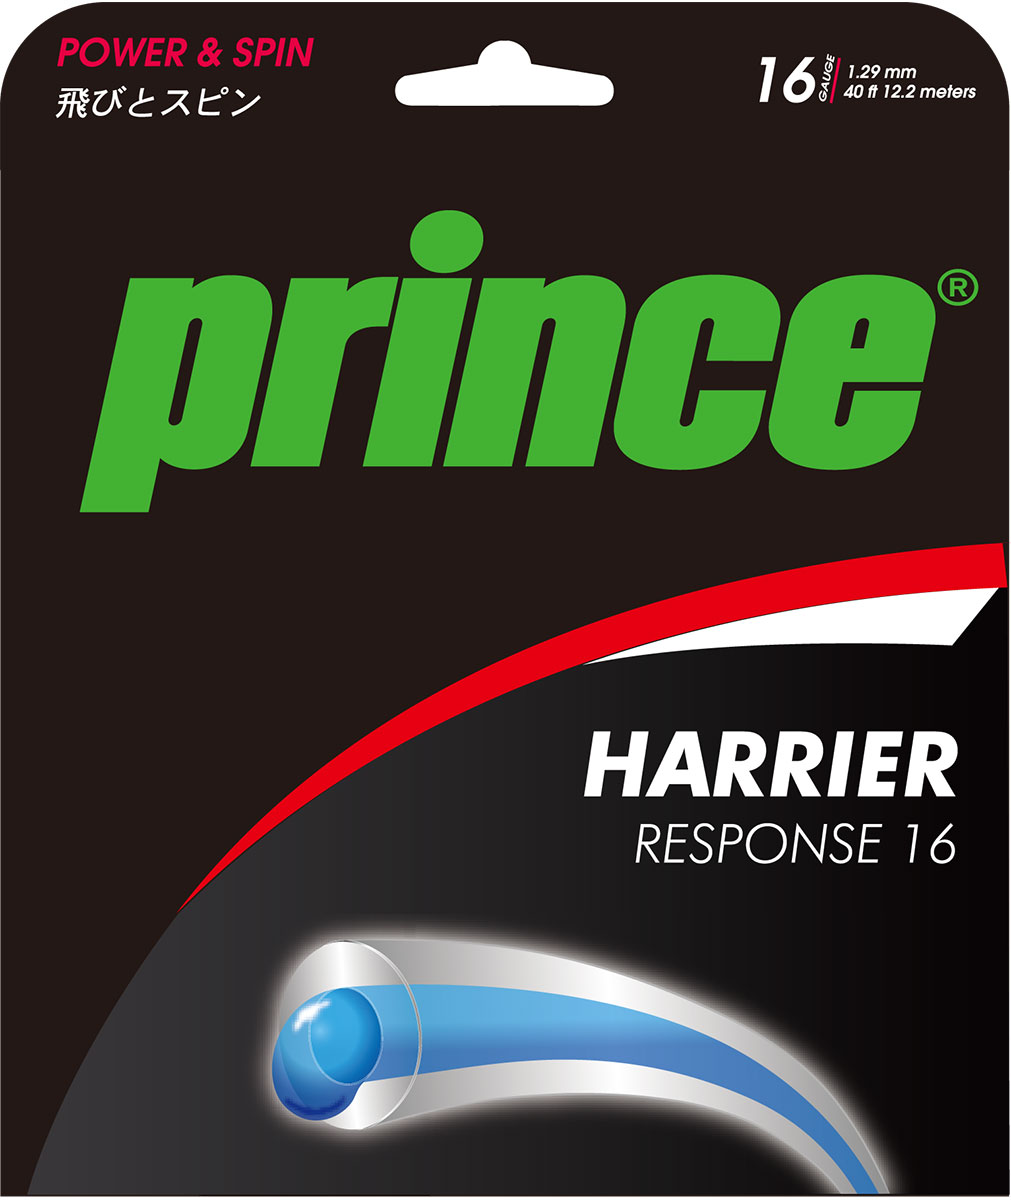 HARRIER RESPONSE 16 - Prince プリンステニス公式サイト